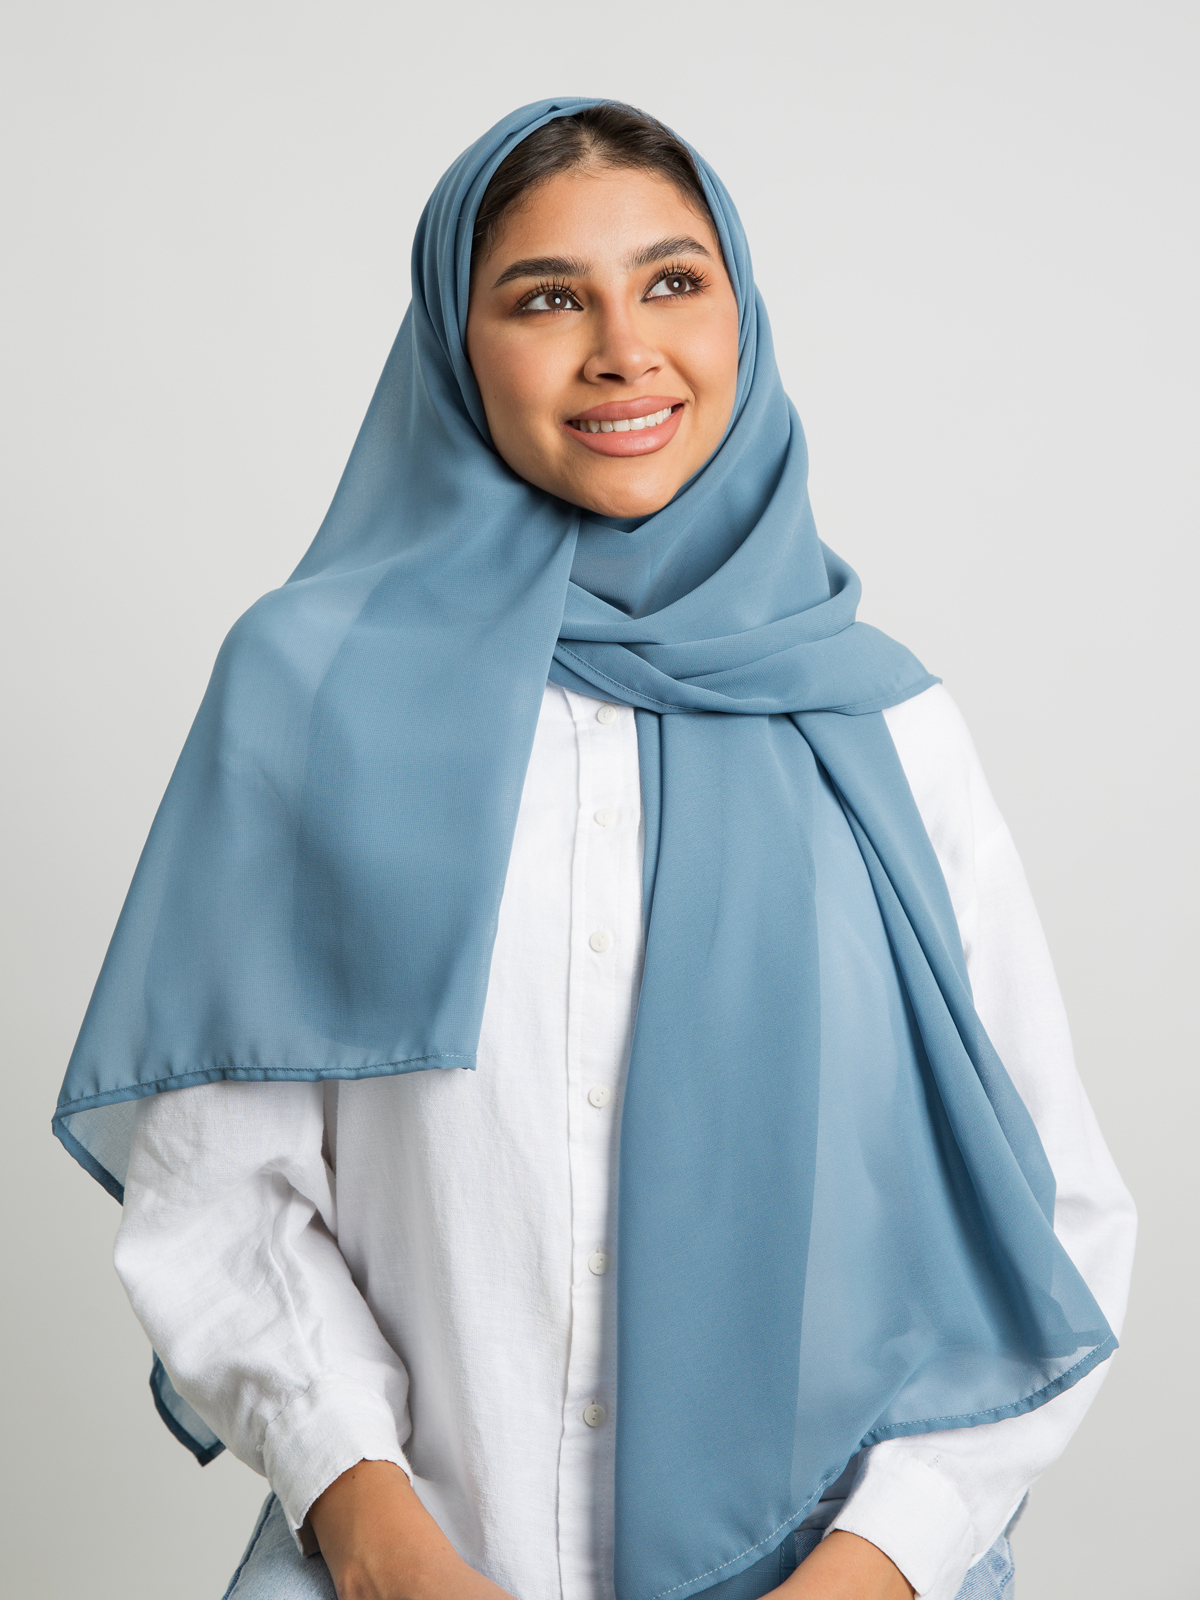 Blue plain light chiffon tarha by kaafmeem hijab for daily wear available in multiple colors